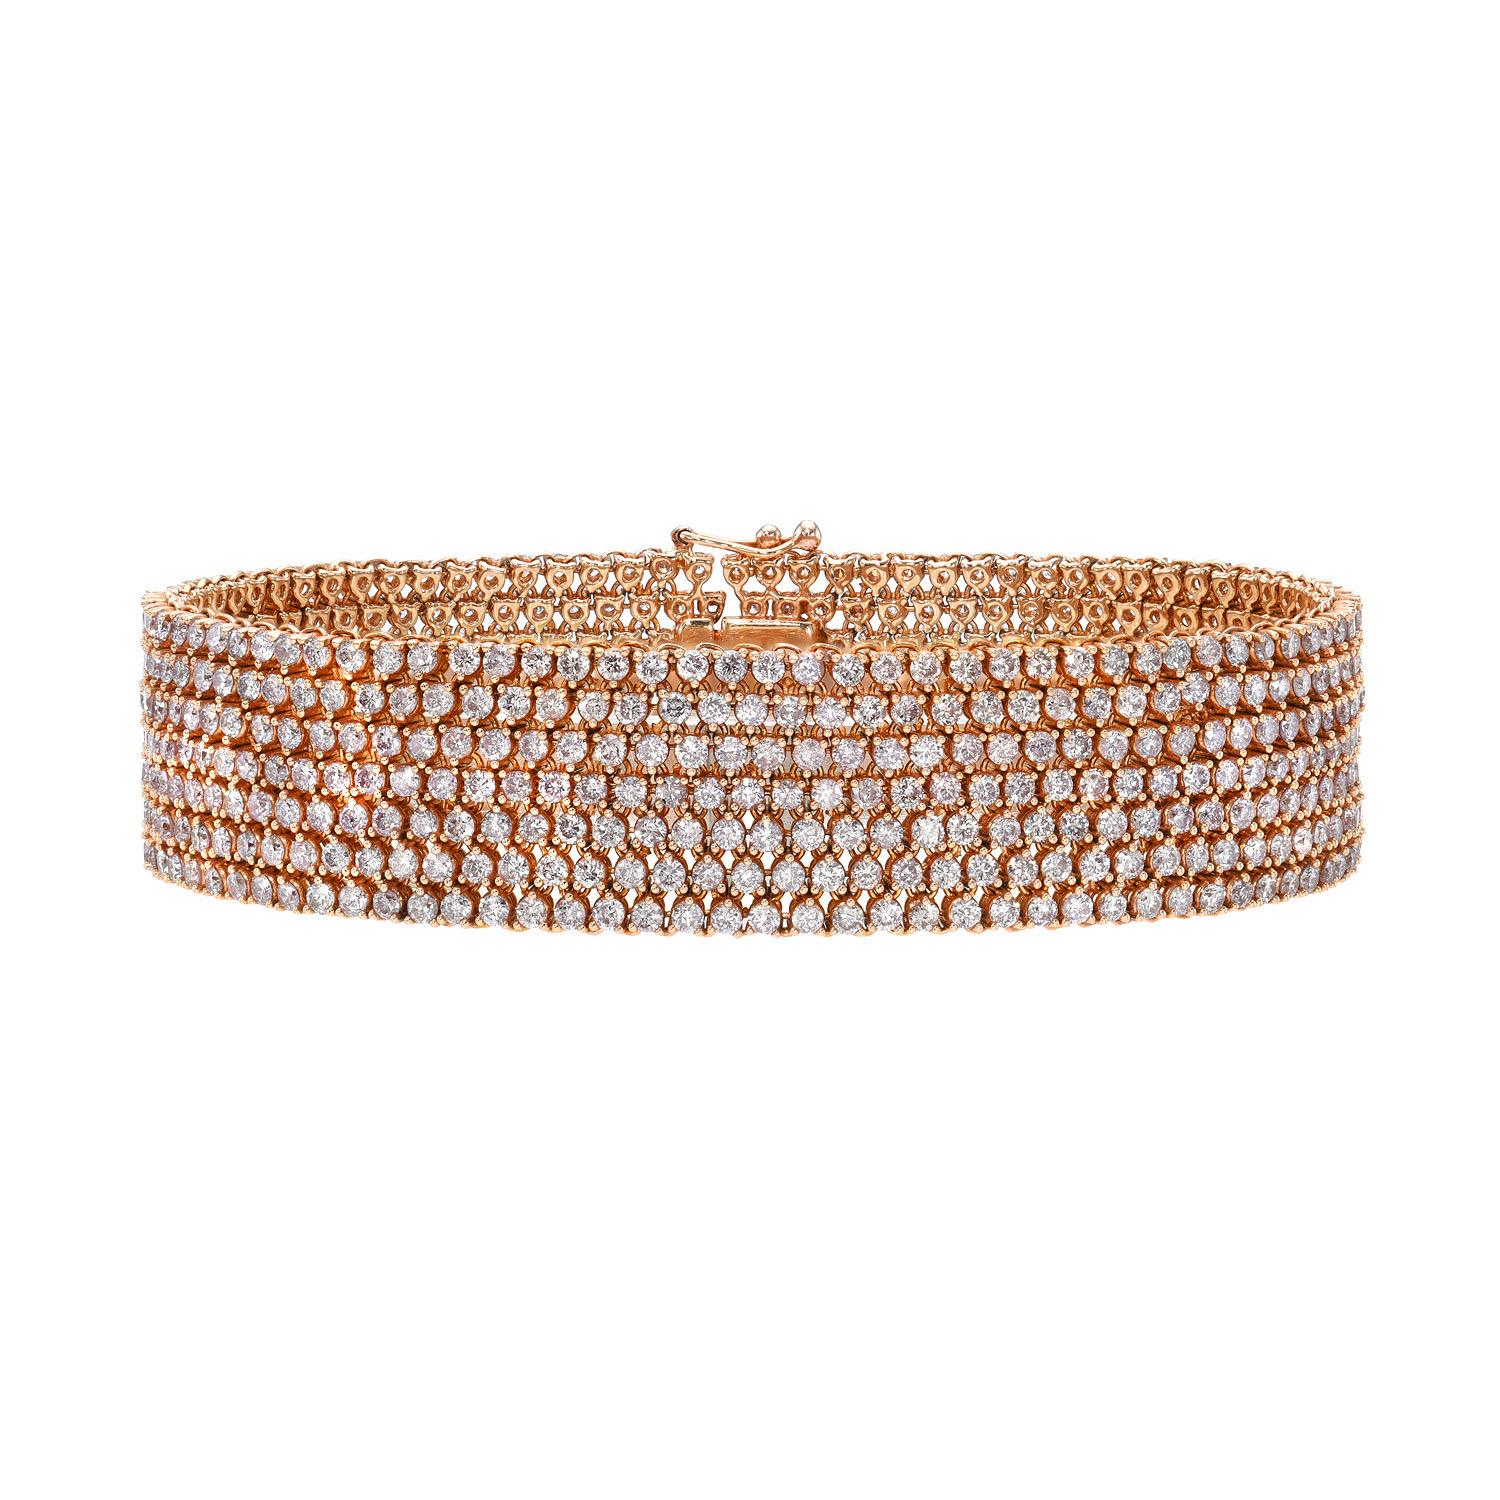 Impressive 18K rose gold flexible Diamond Tennis Bracelet, weighing a total of 13.42 carats.
Diamond color: G-H
Diamond clarity: VS-SI1
Diamond bracelet total length - 7